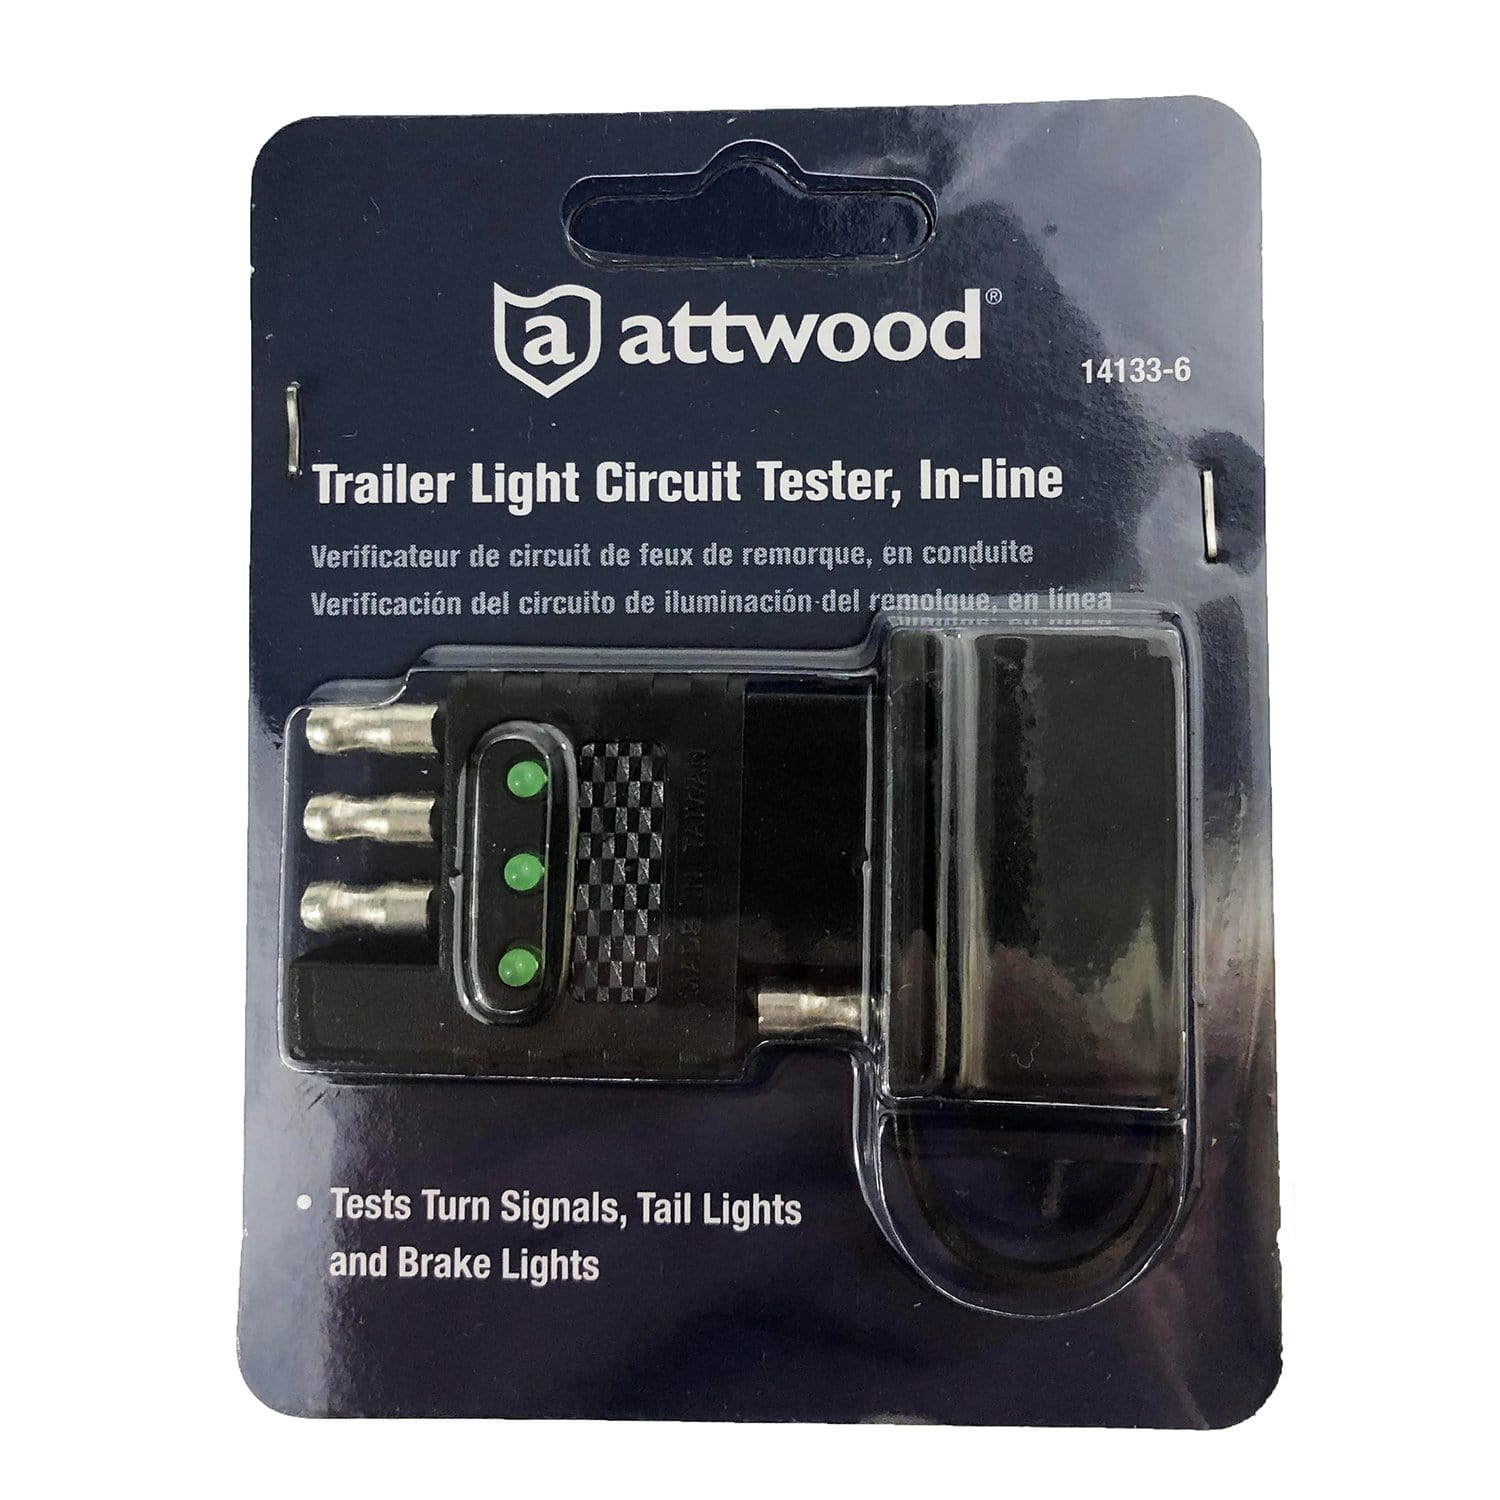 Attwood 14133-6 Trailer Light Circuit Tester